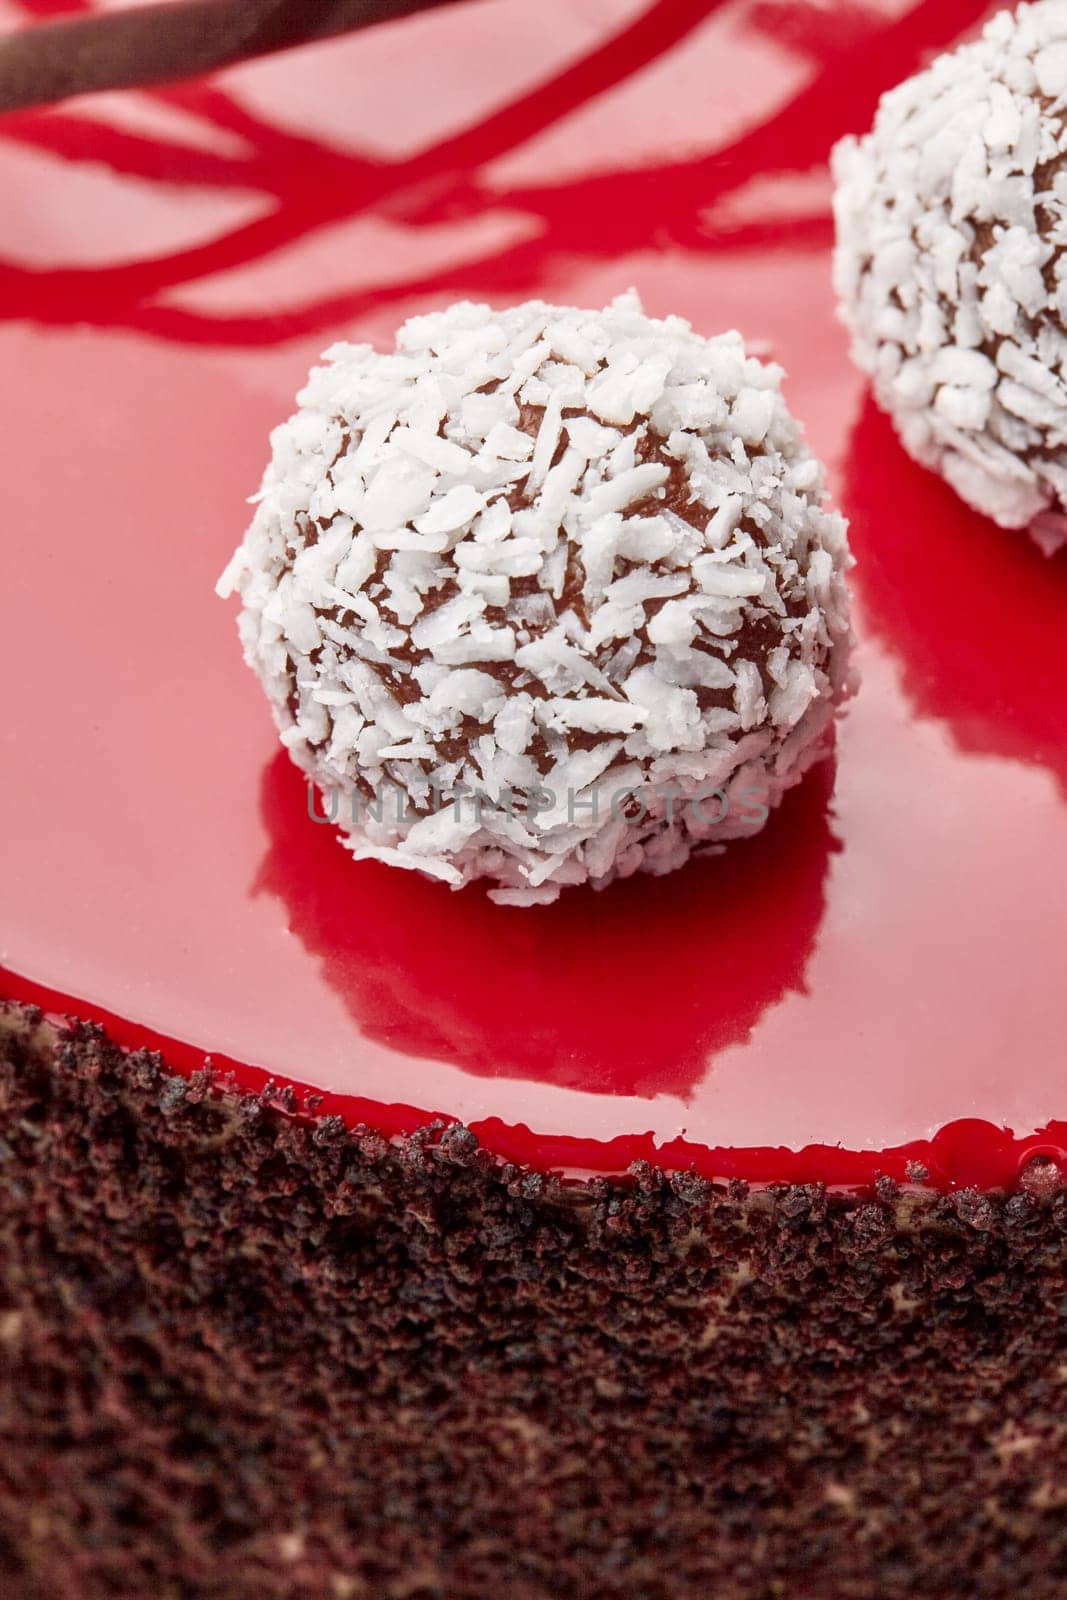 Coconut truffles on red glaze decorating handmade chocolate cake by nazarovsergey